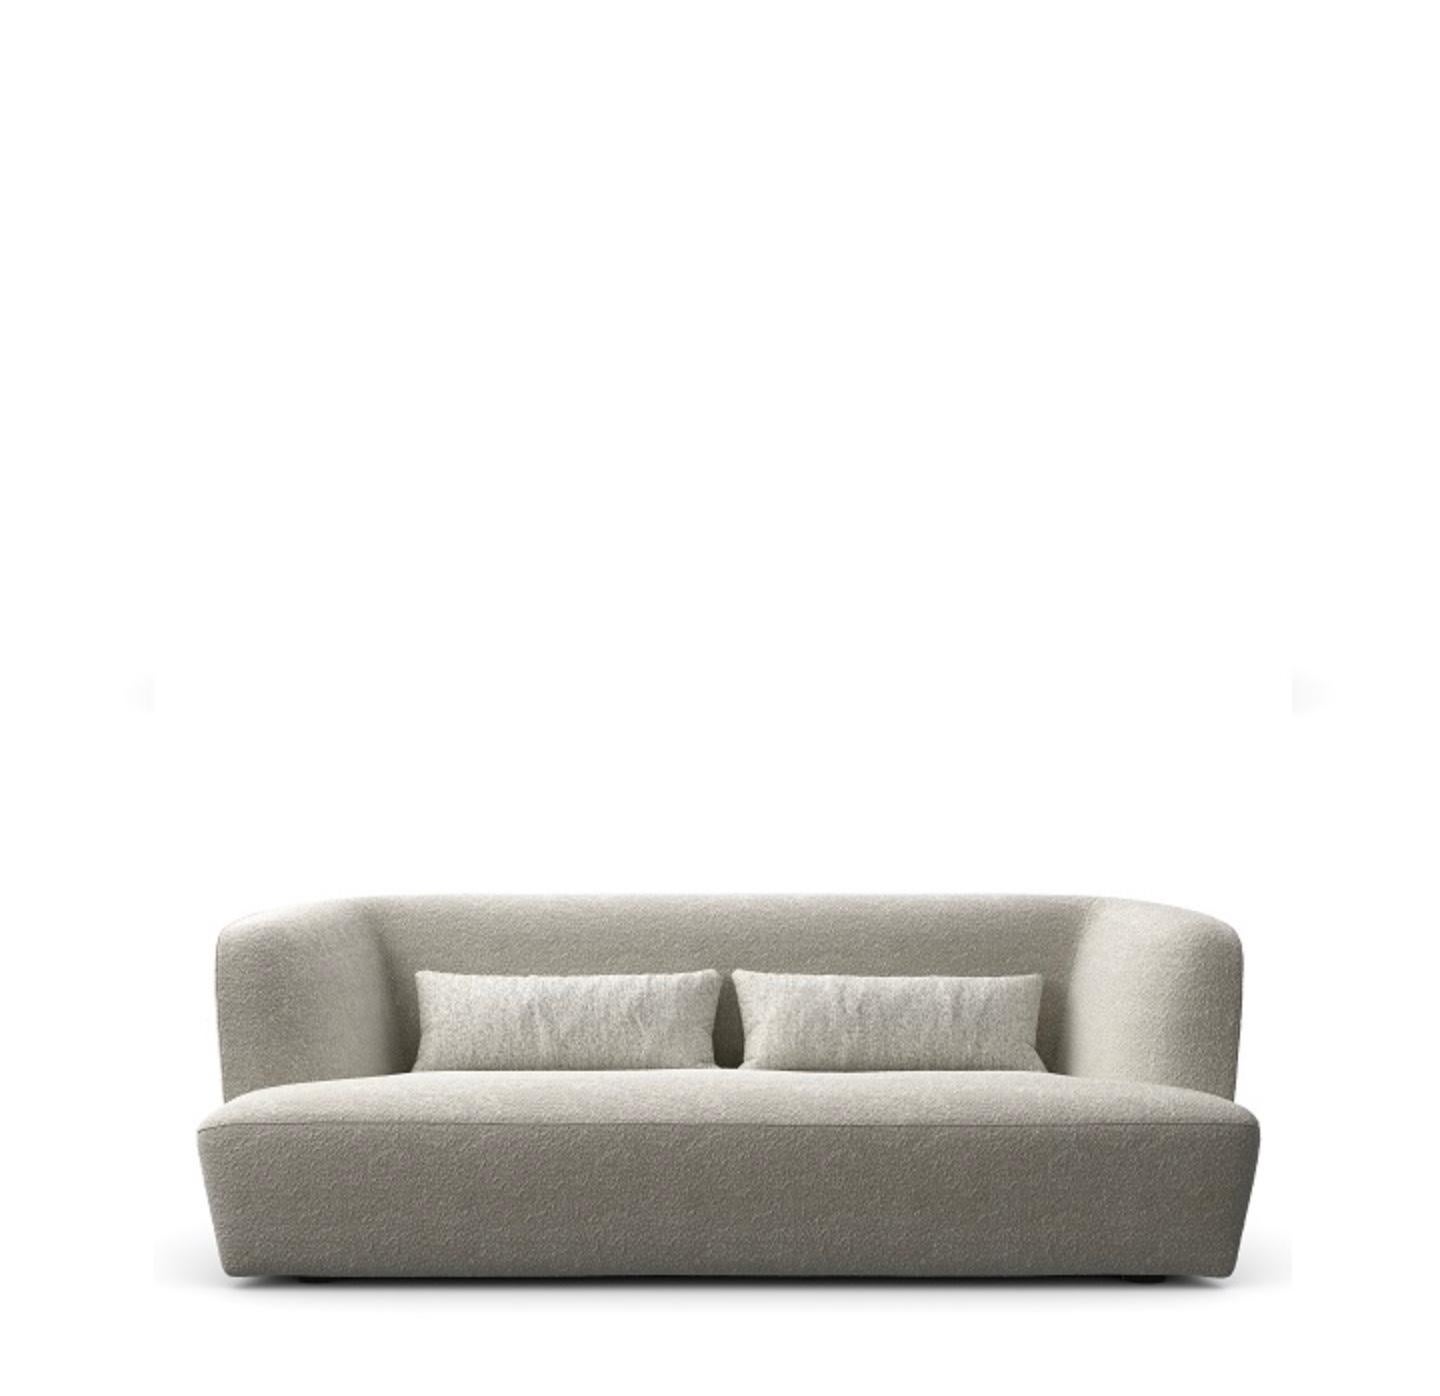 Lievore + Altherr Désile Park 'Davos' Sofa 175 for Verzelloni, Italy For Sale 3